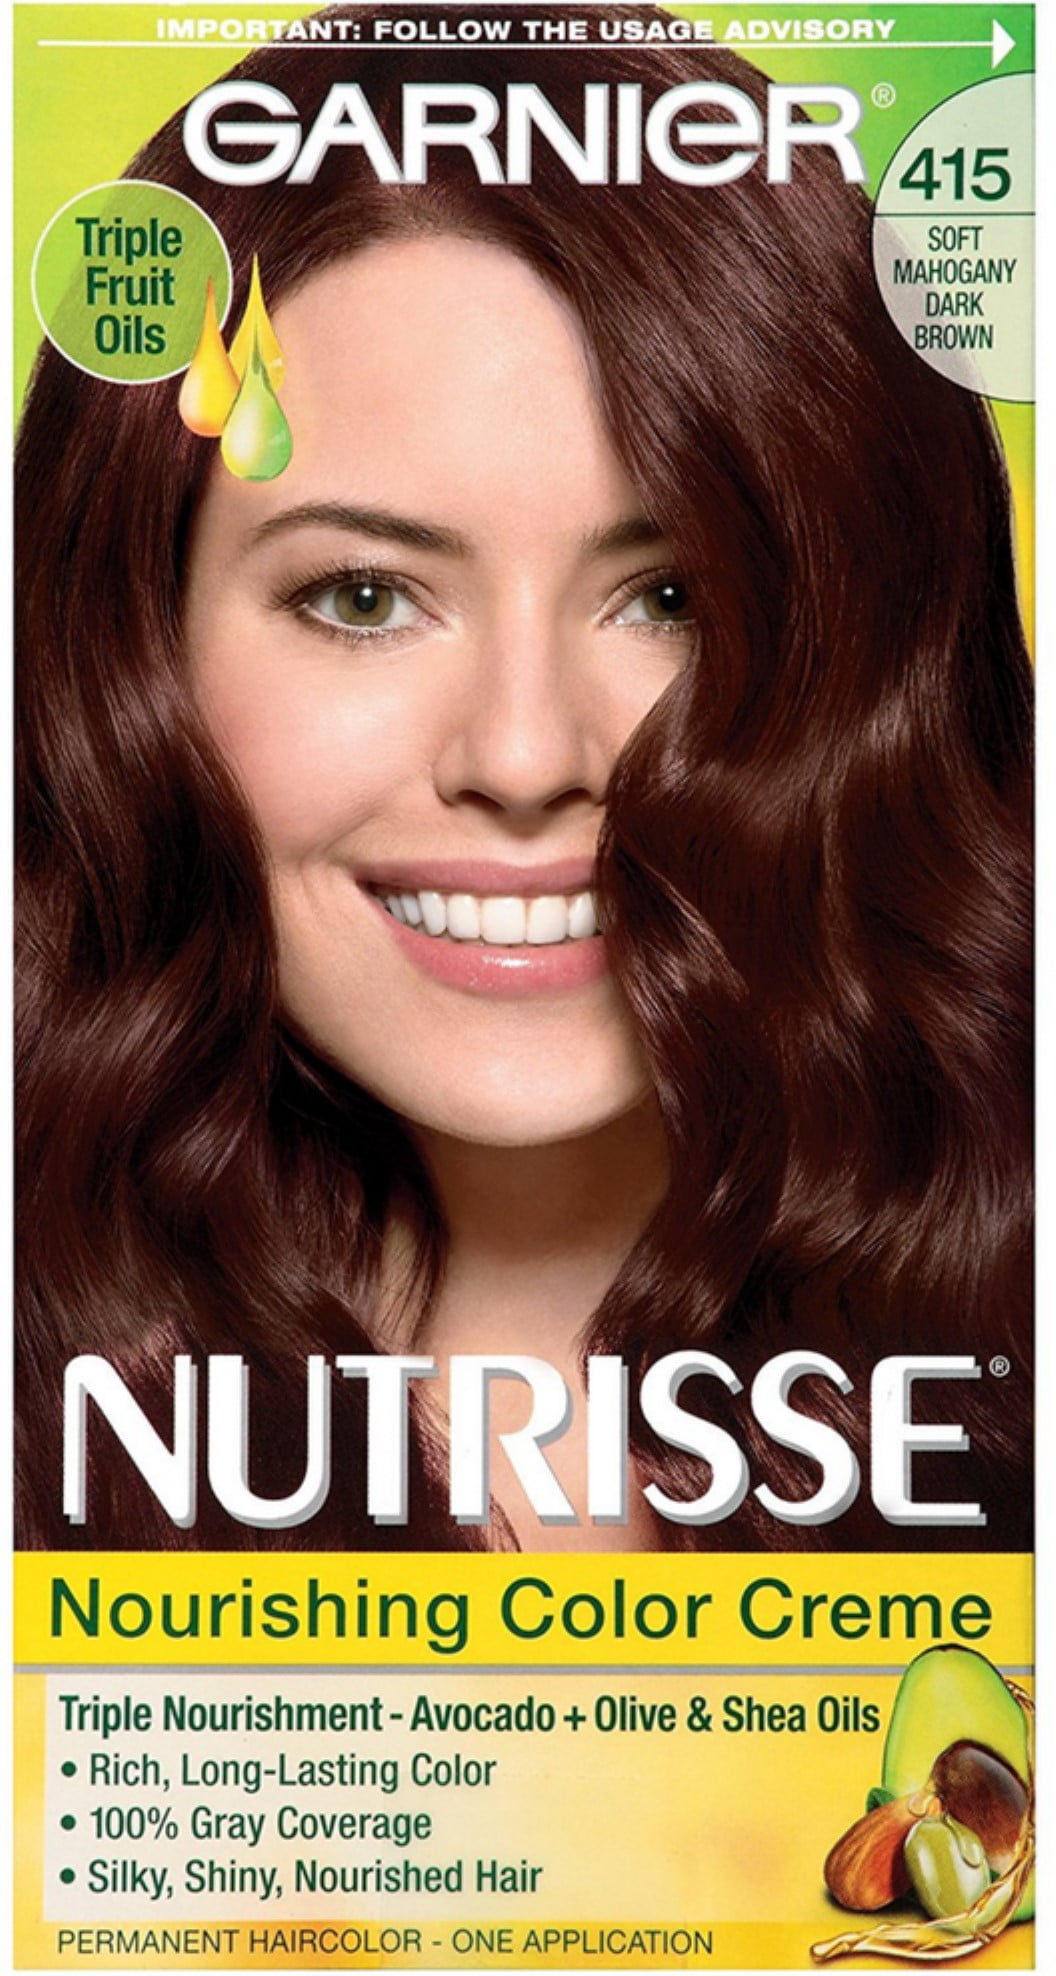 Garnier Nutrisse Hair Color, 415 Soft Mahogany Dark Brown, 1 Each -  